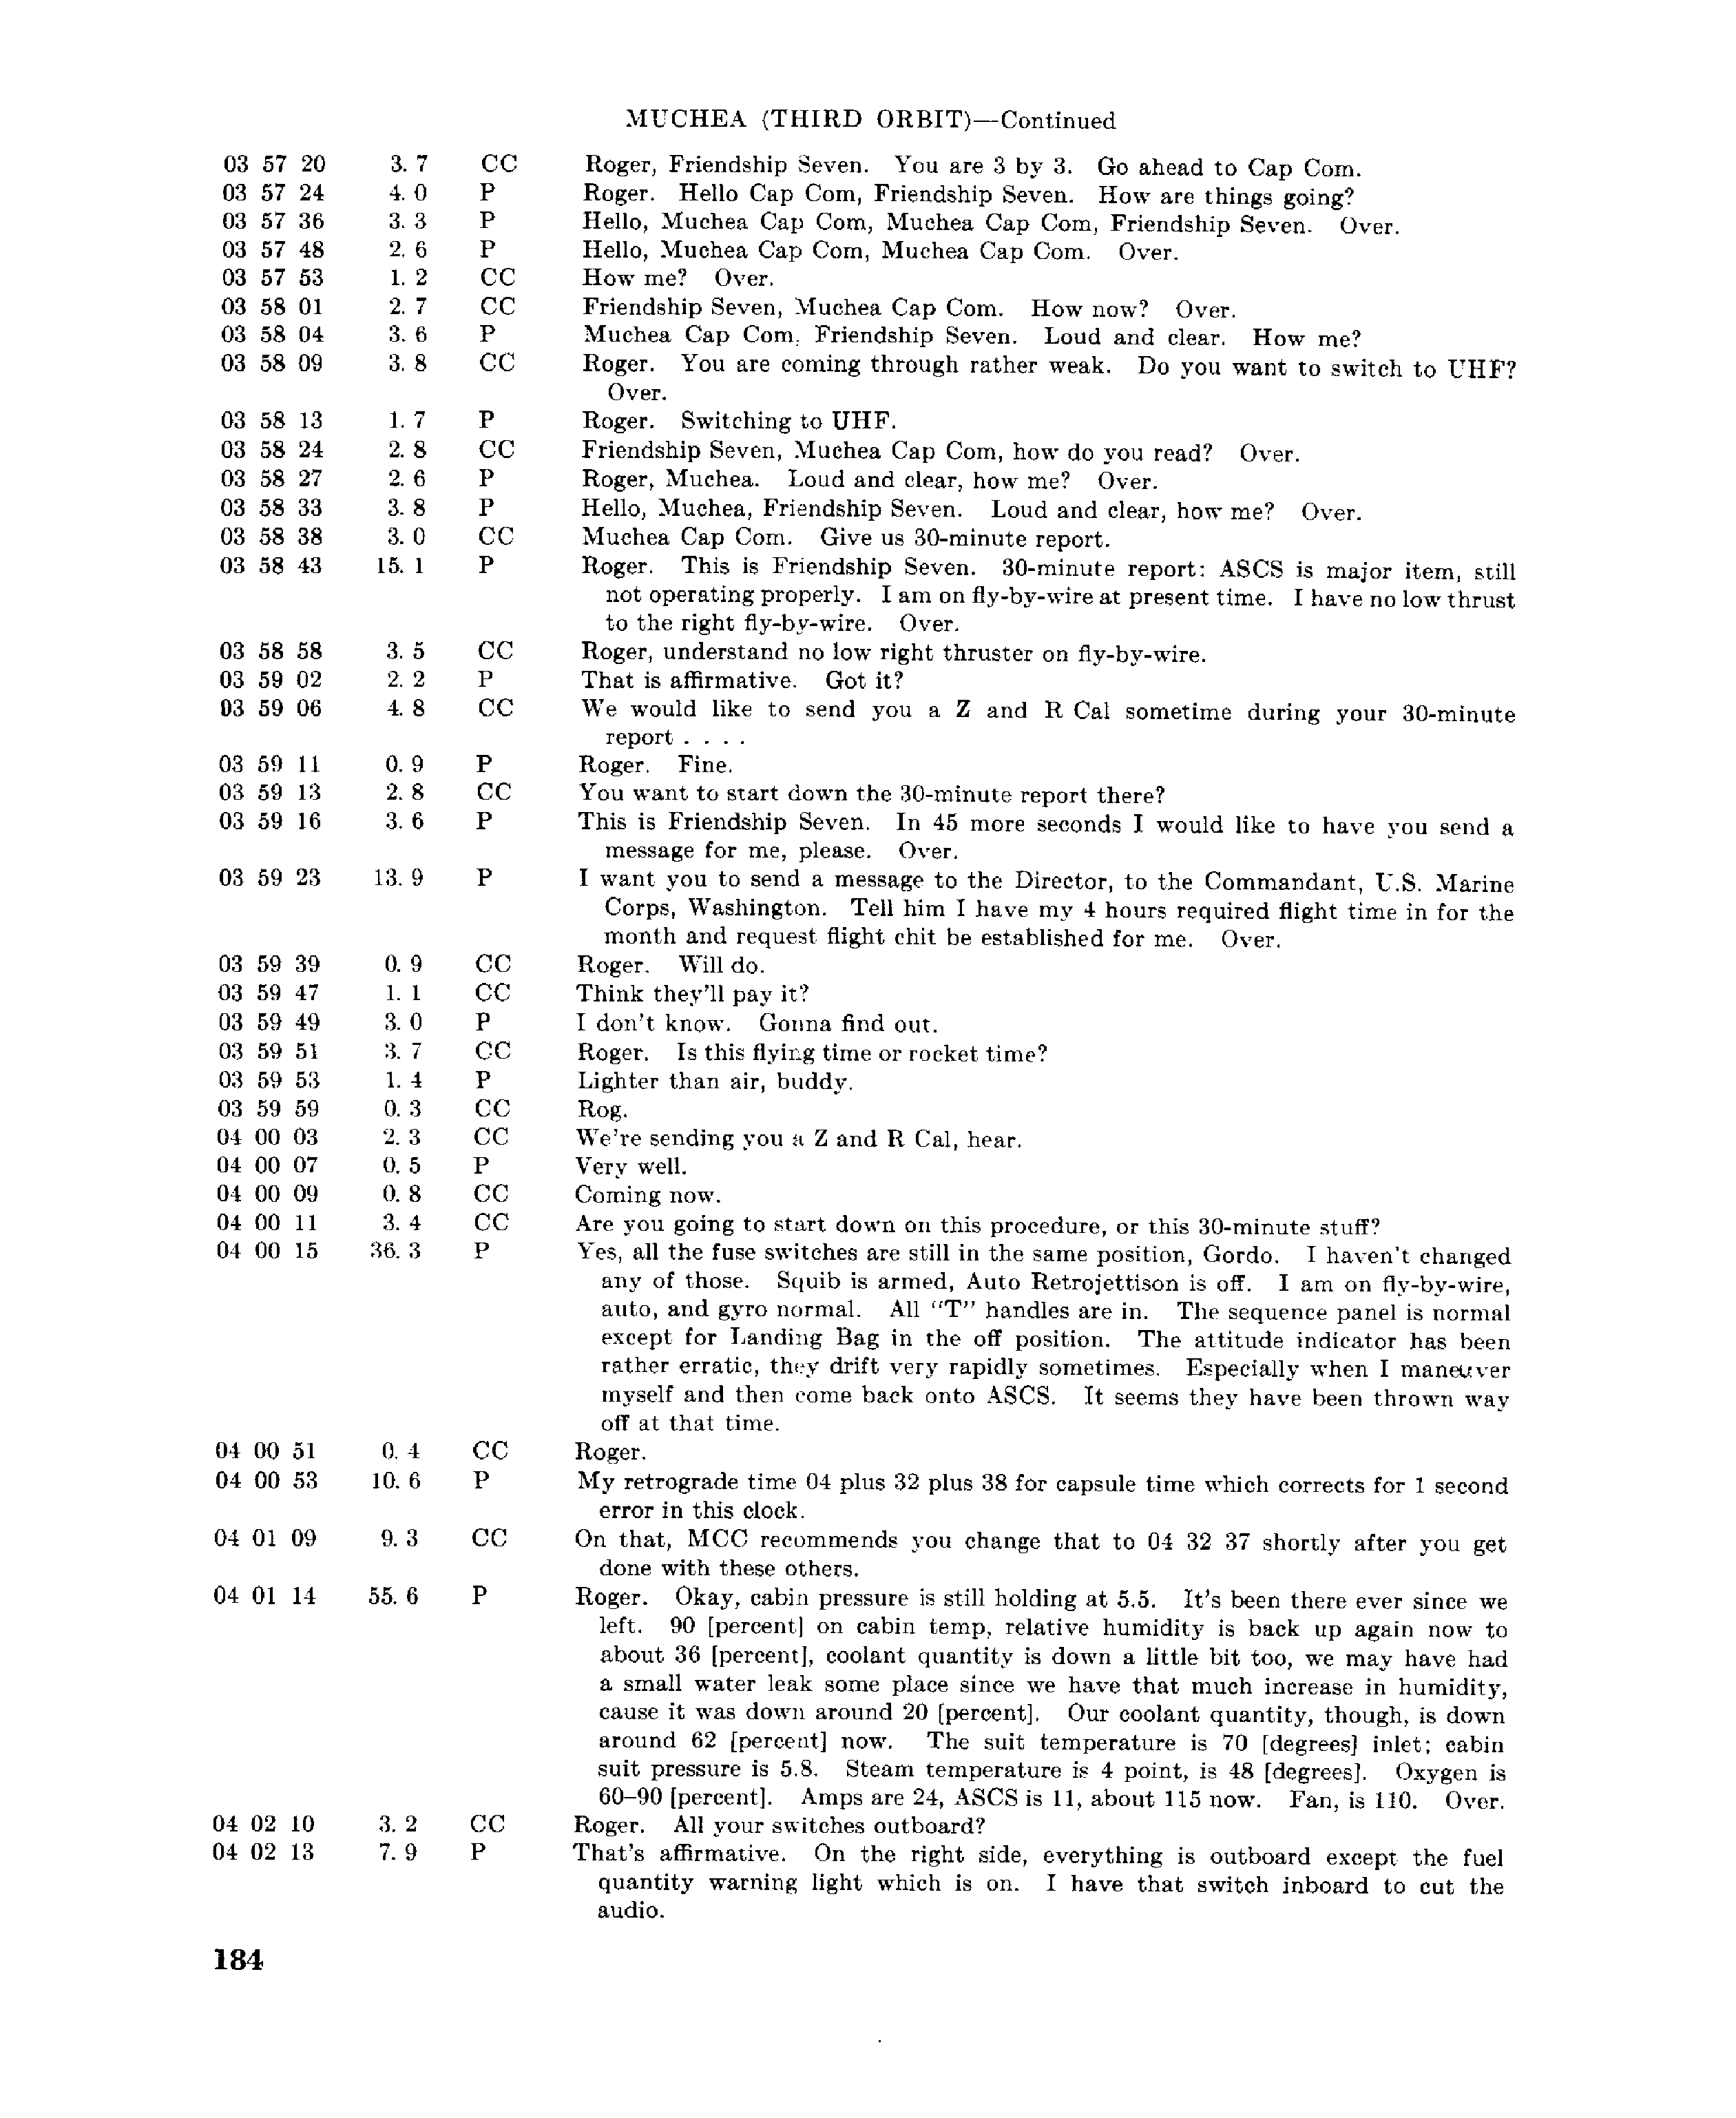 Page 183 of Mercury 6’s original transcript